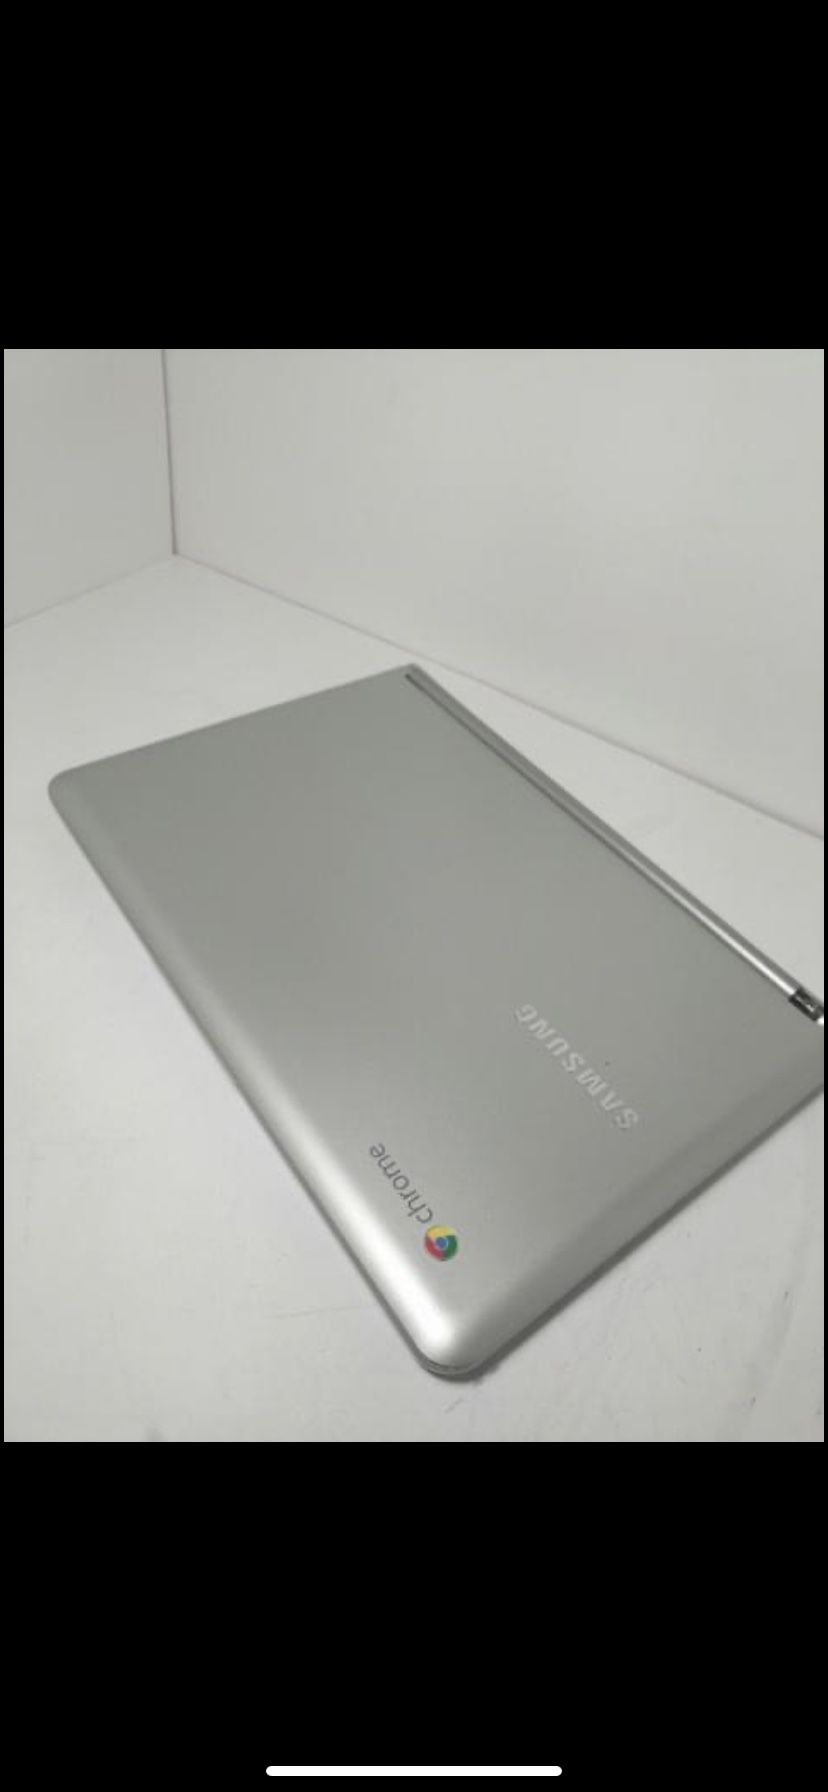 Chromebook 12” laptop PC Computer Google YouTube